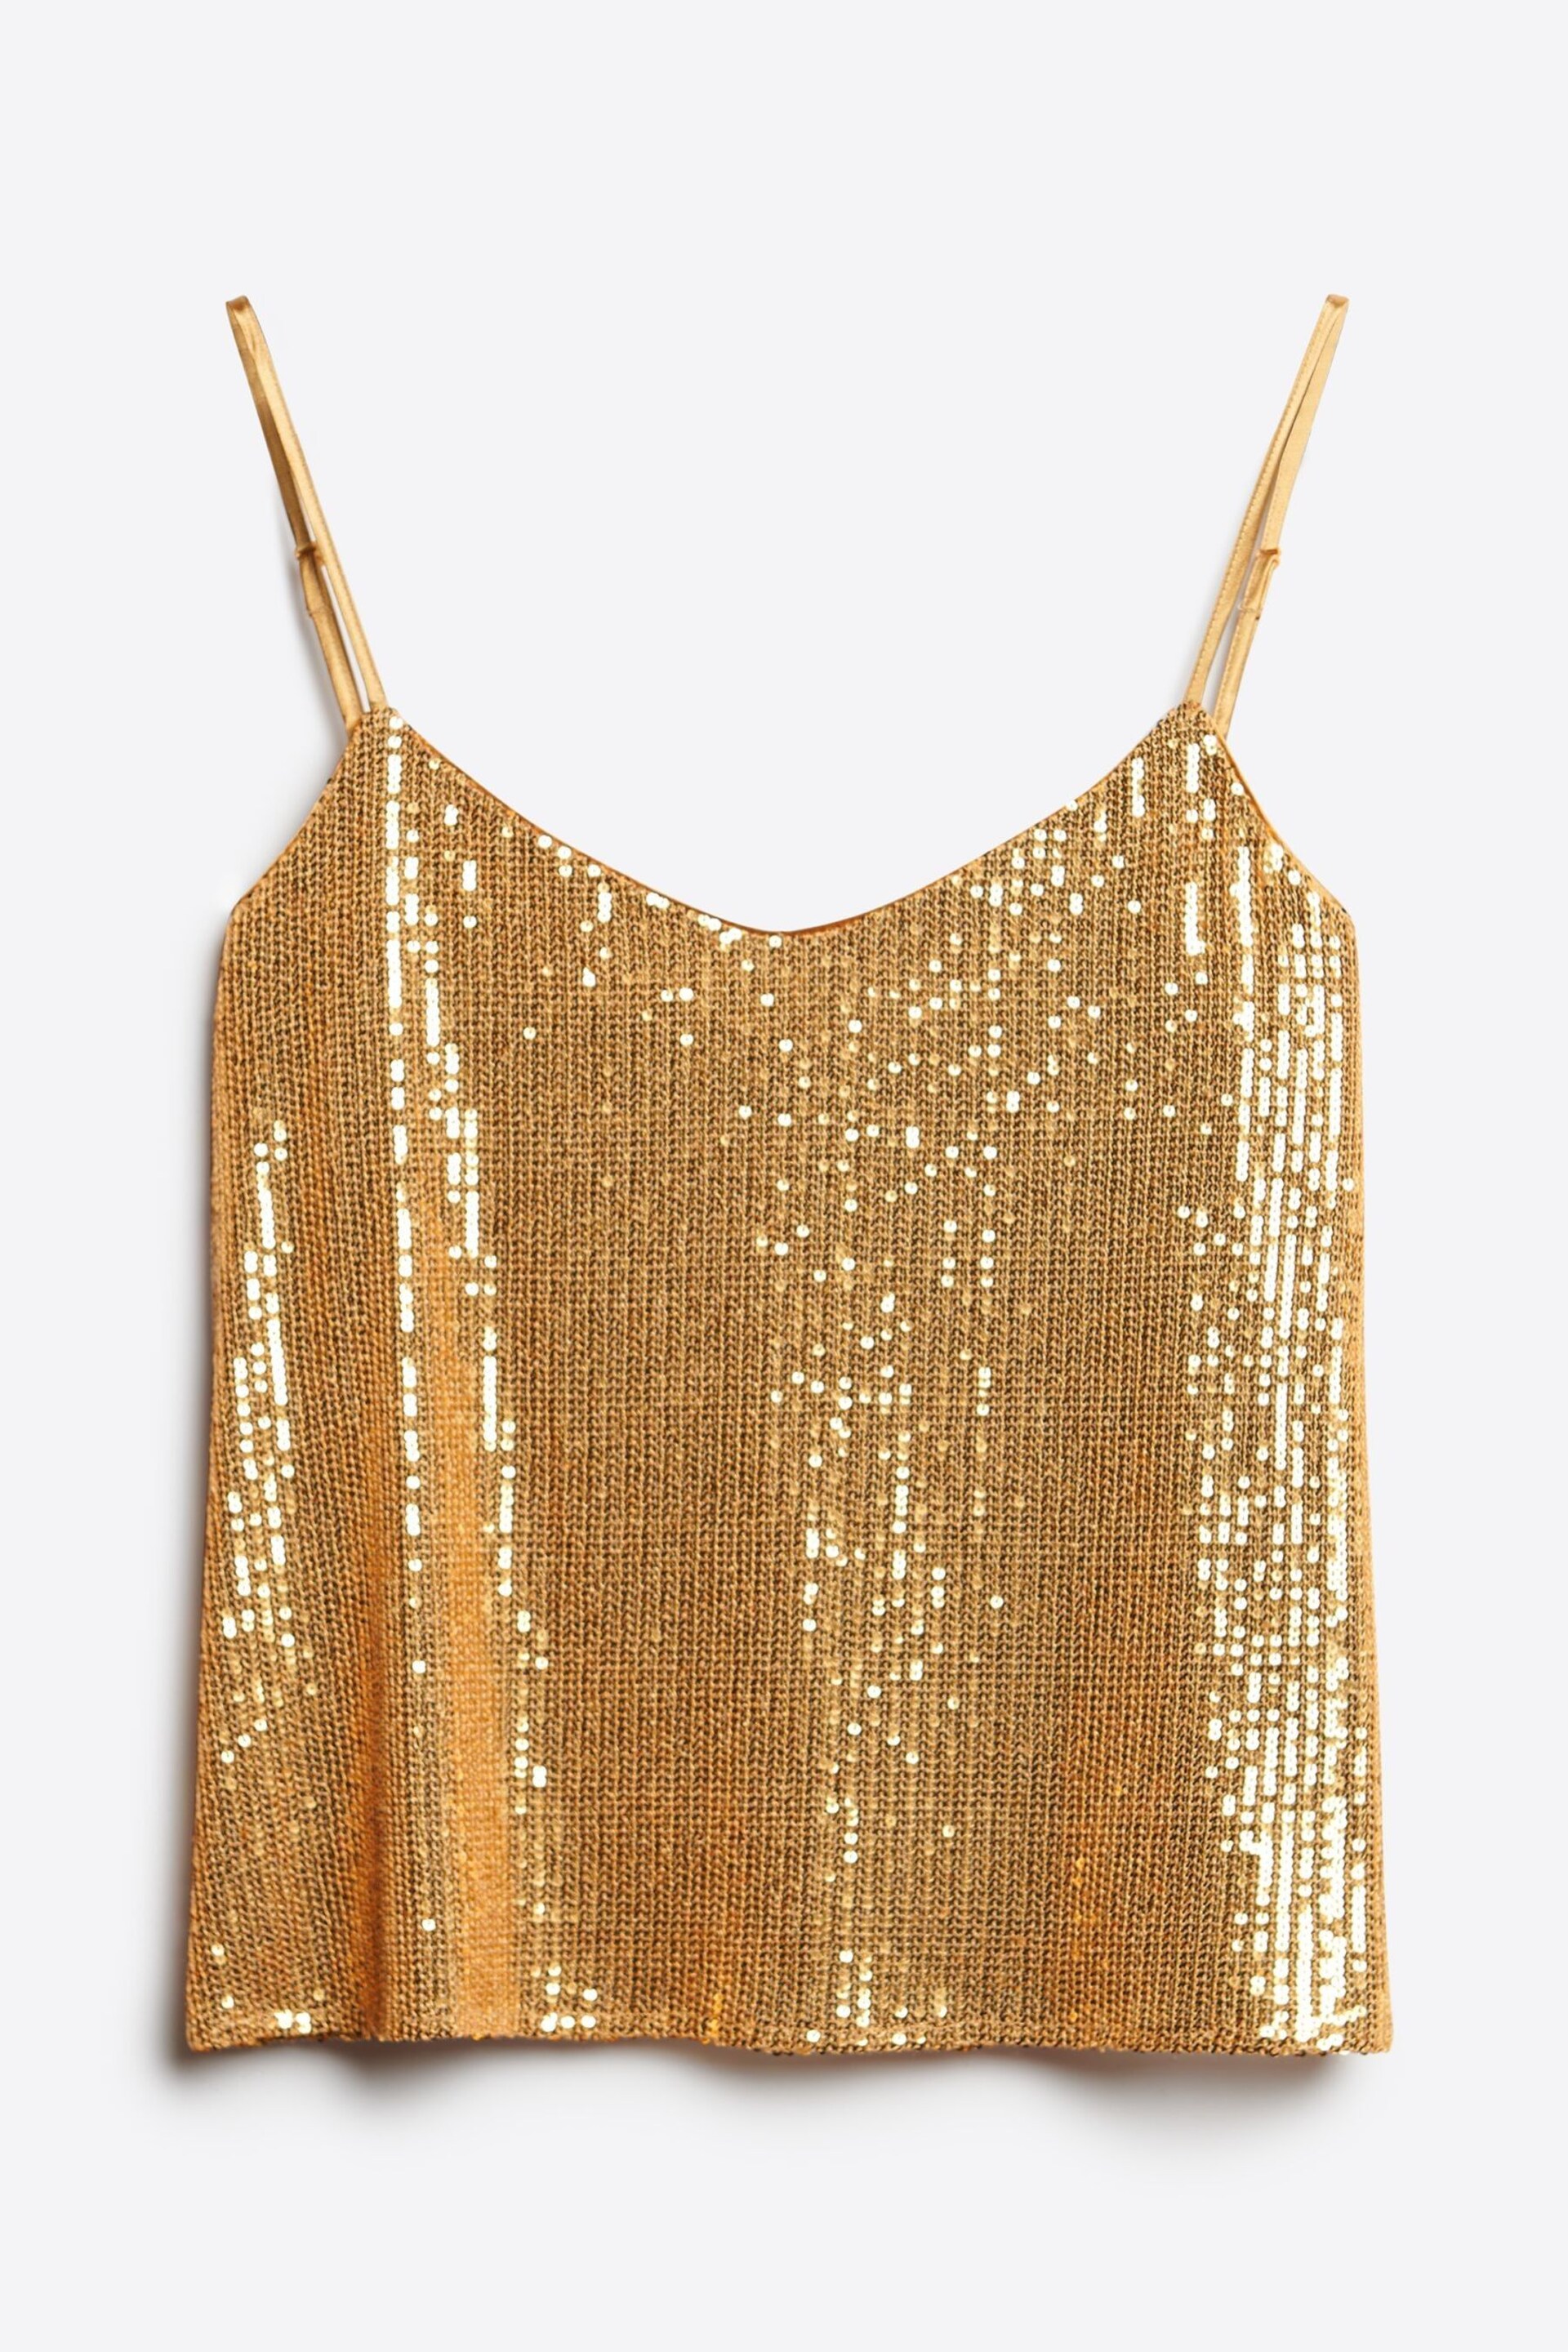 Superdry Gold Sequin Cami Vest Top - Image 4 of 5